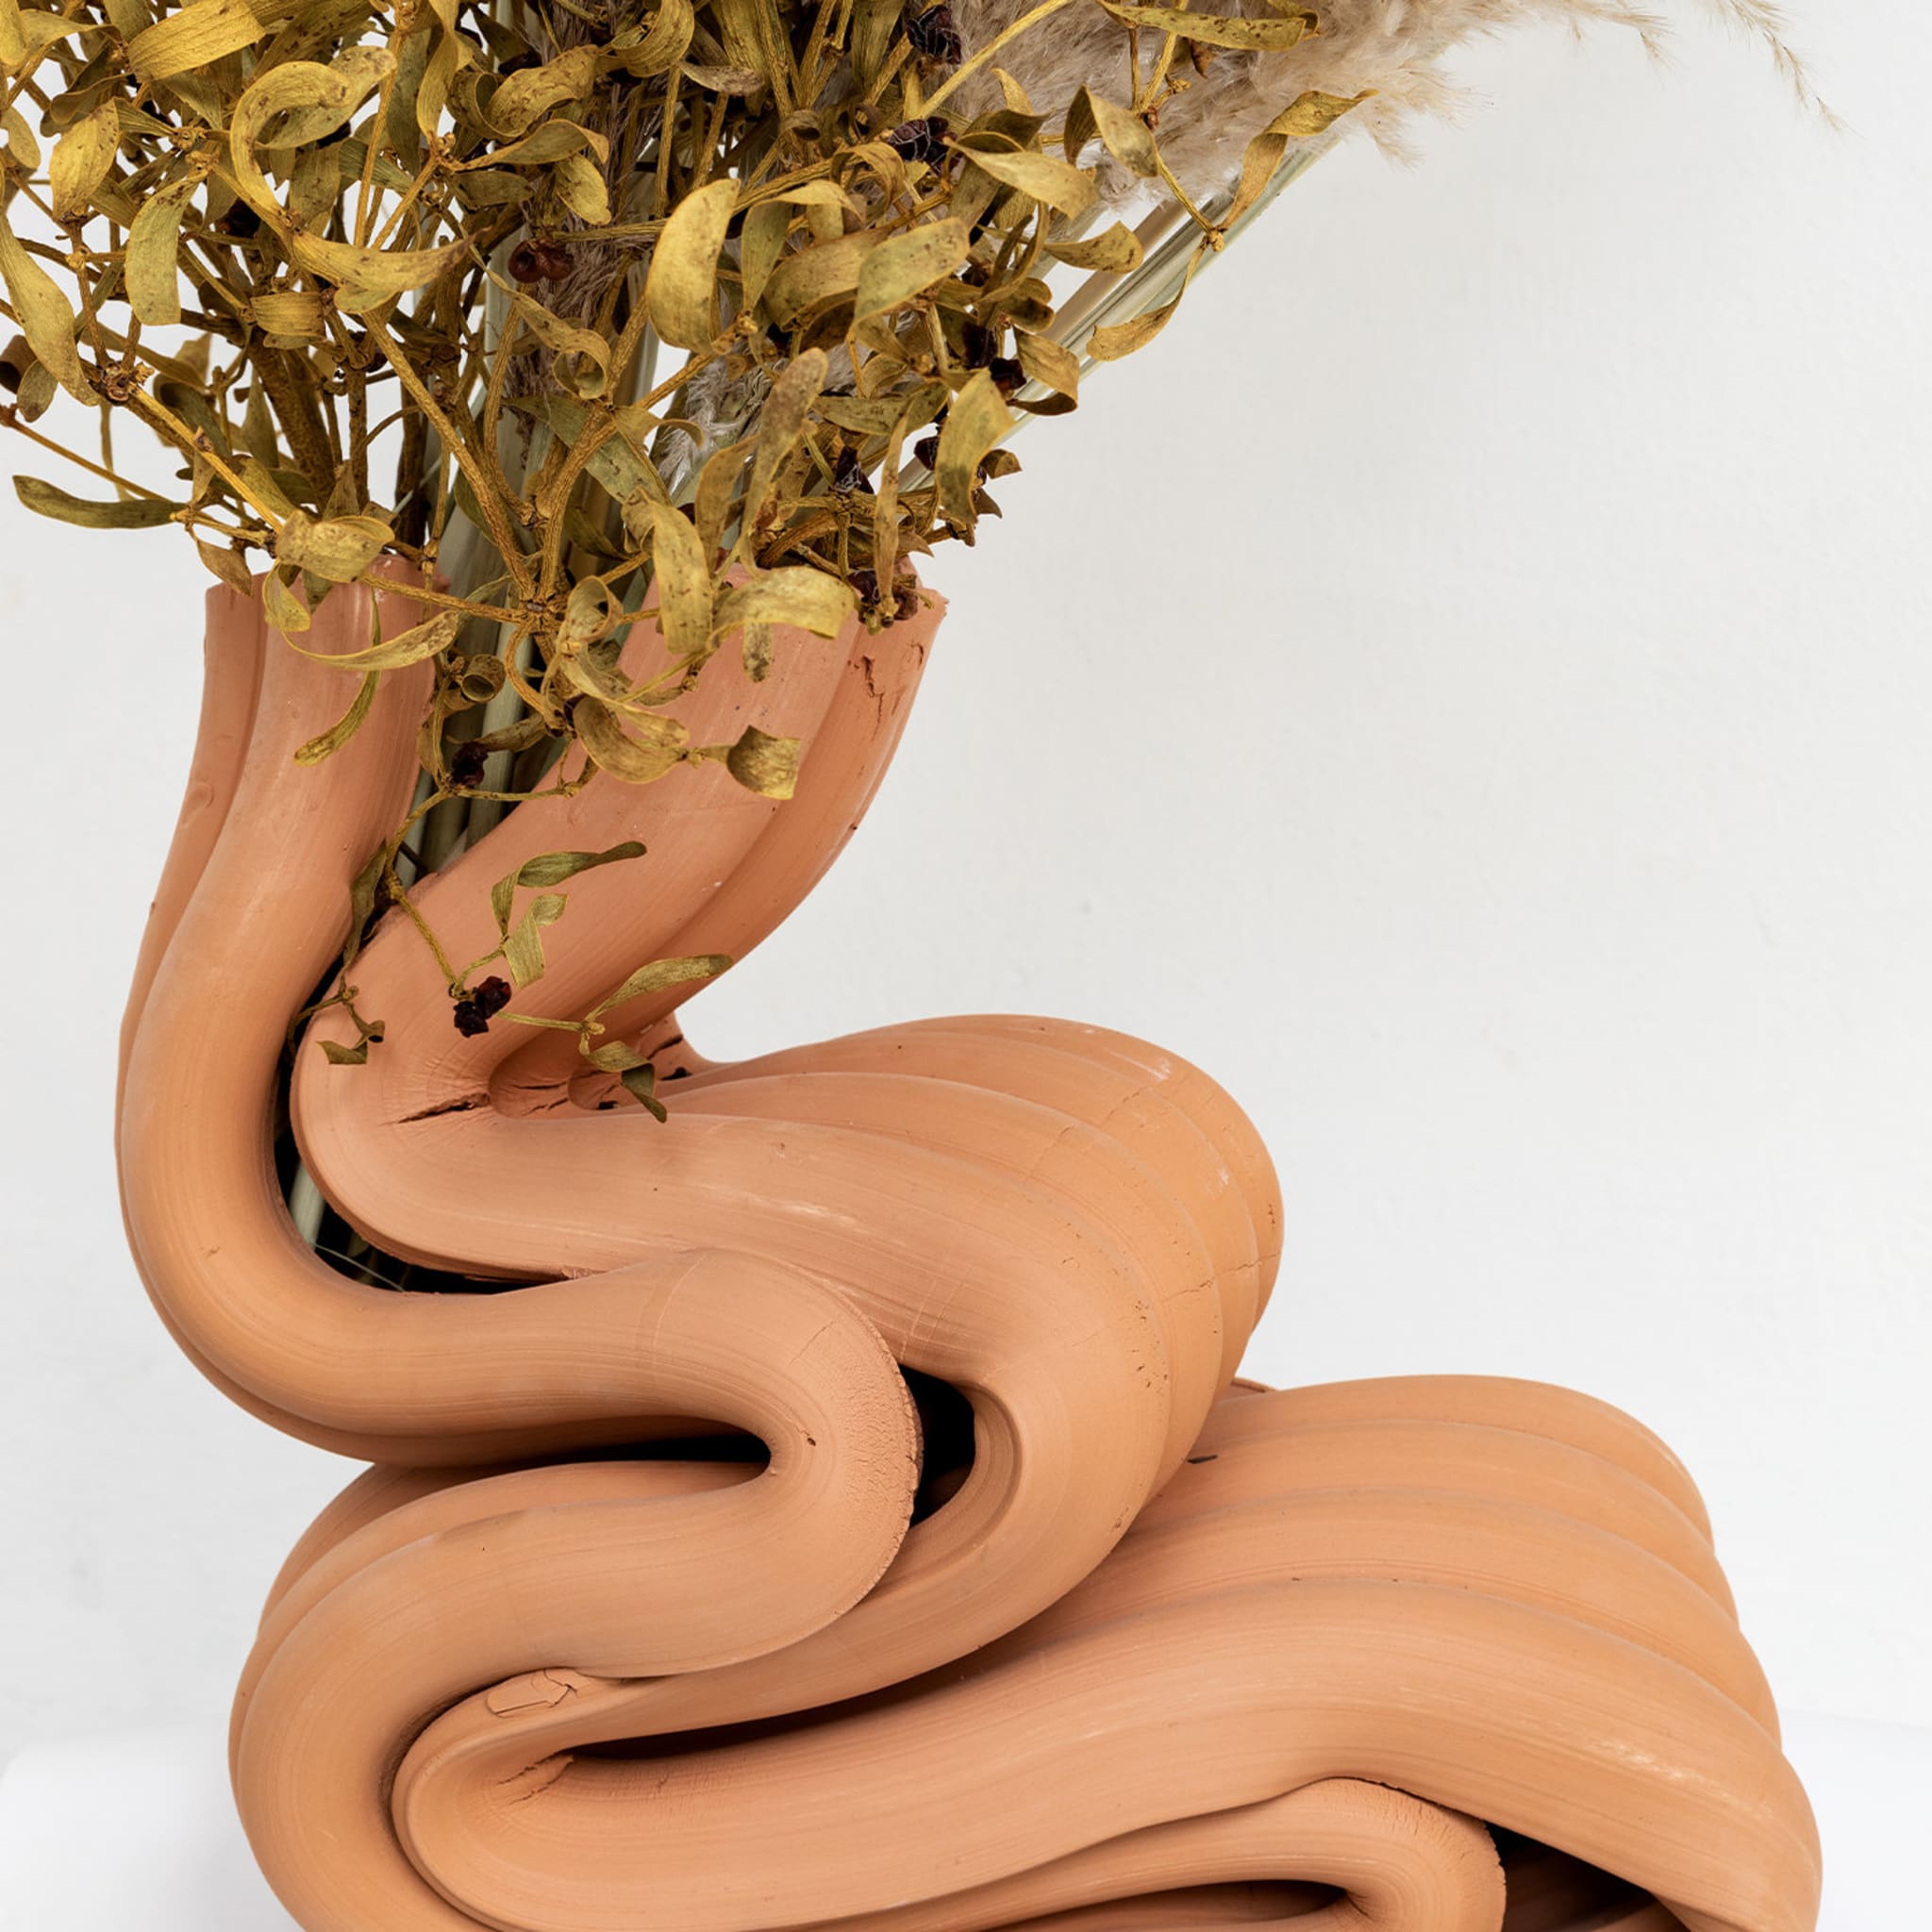 Almost Home Vase by Diego Cibelli #2 - Alternative view 1